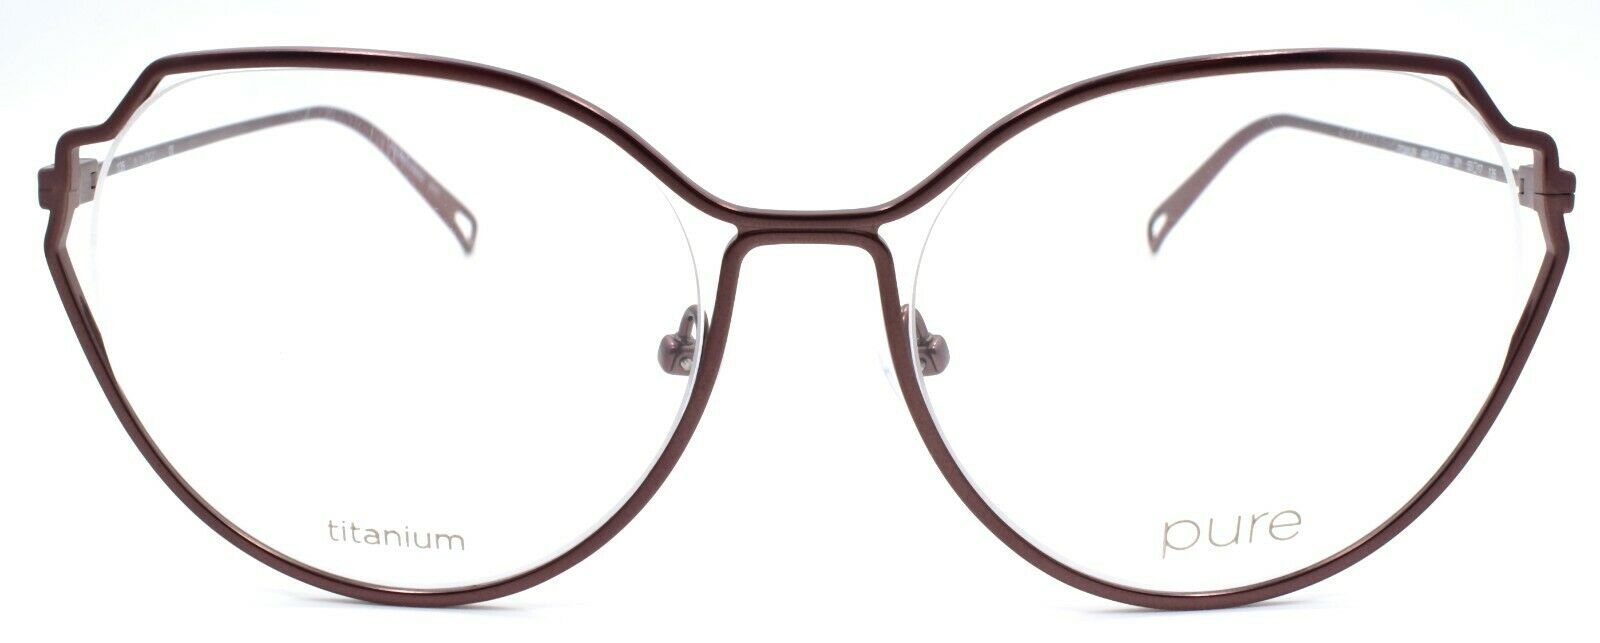 2-Airlock 5001 601 Women's Eyeglasses Frames Titanium 53-17-135 Rose-886895459082-IKSpecs